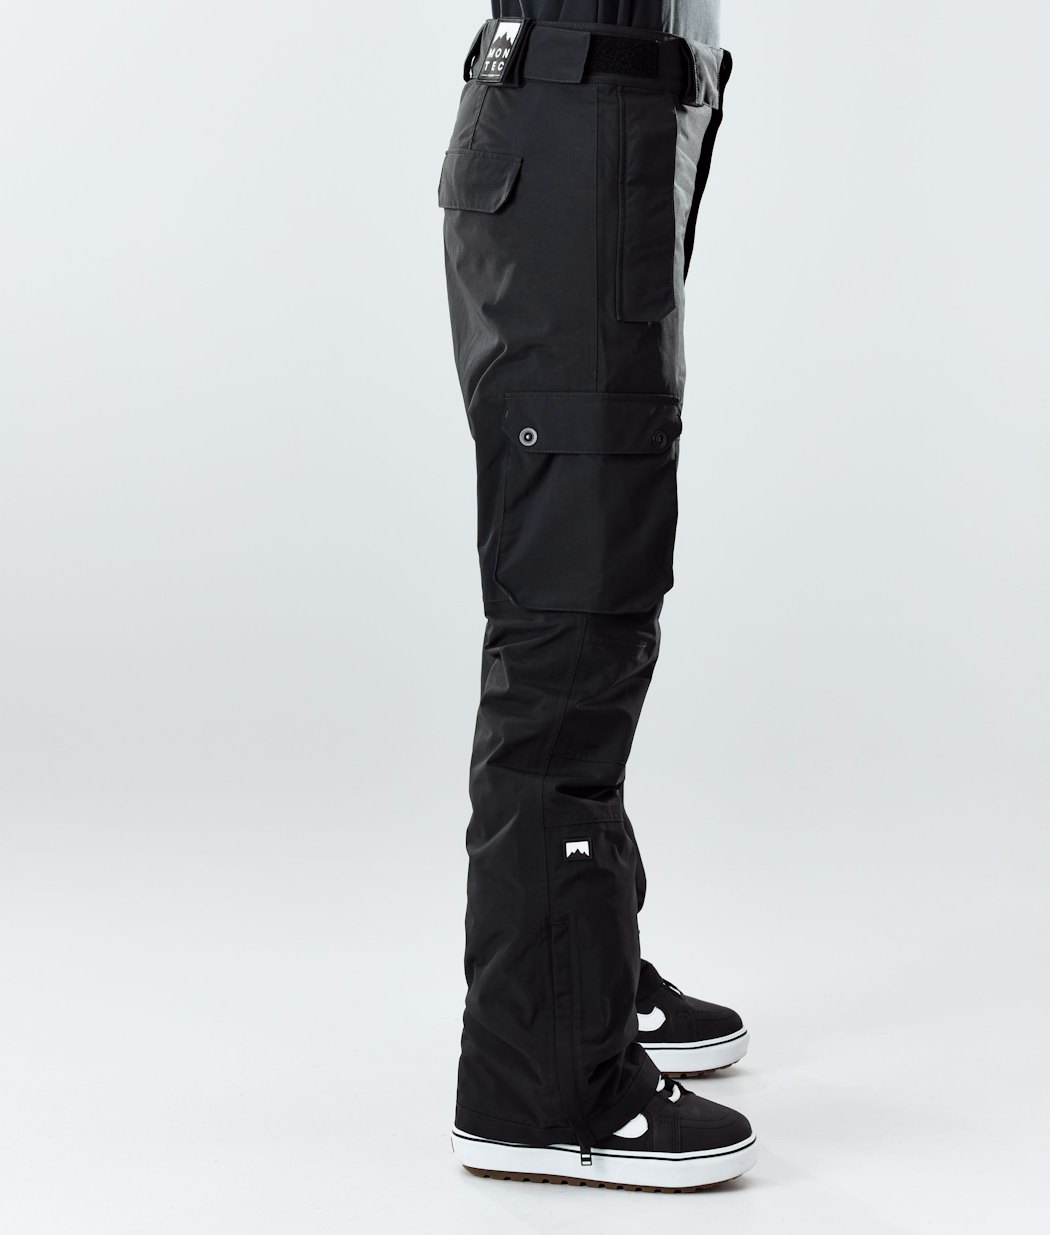 Doom W 2020 Pantalon de Snowboard Femme Black